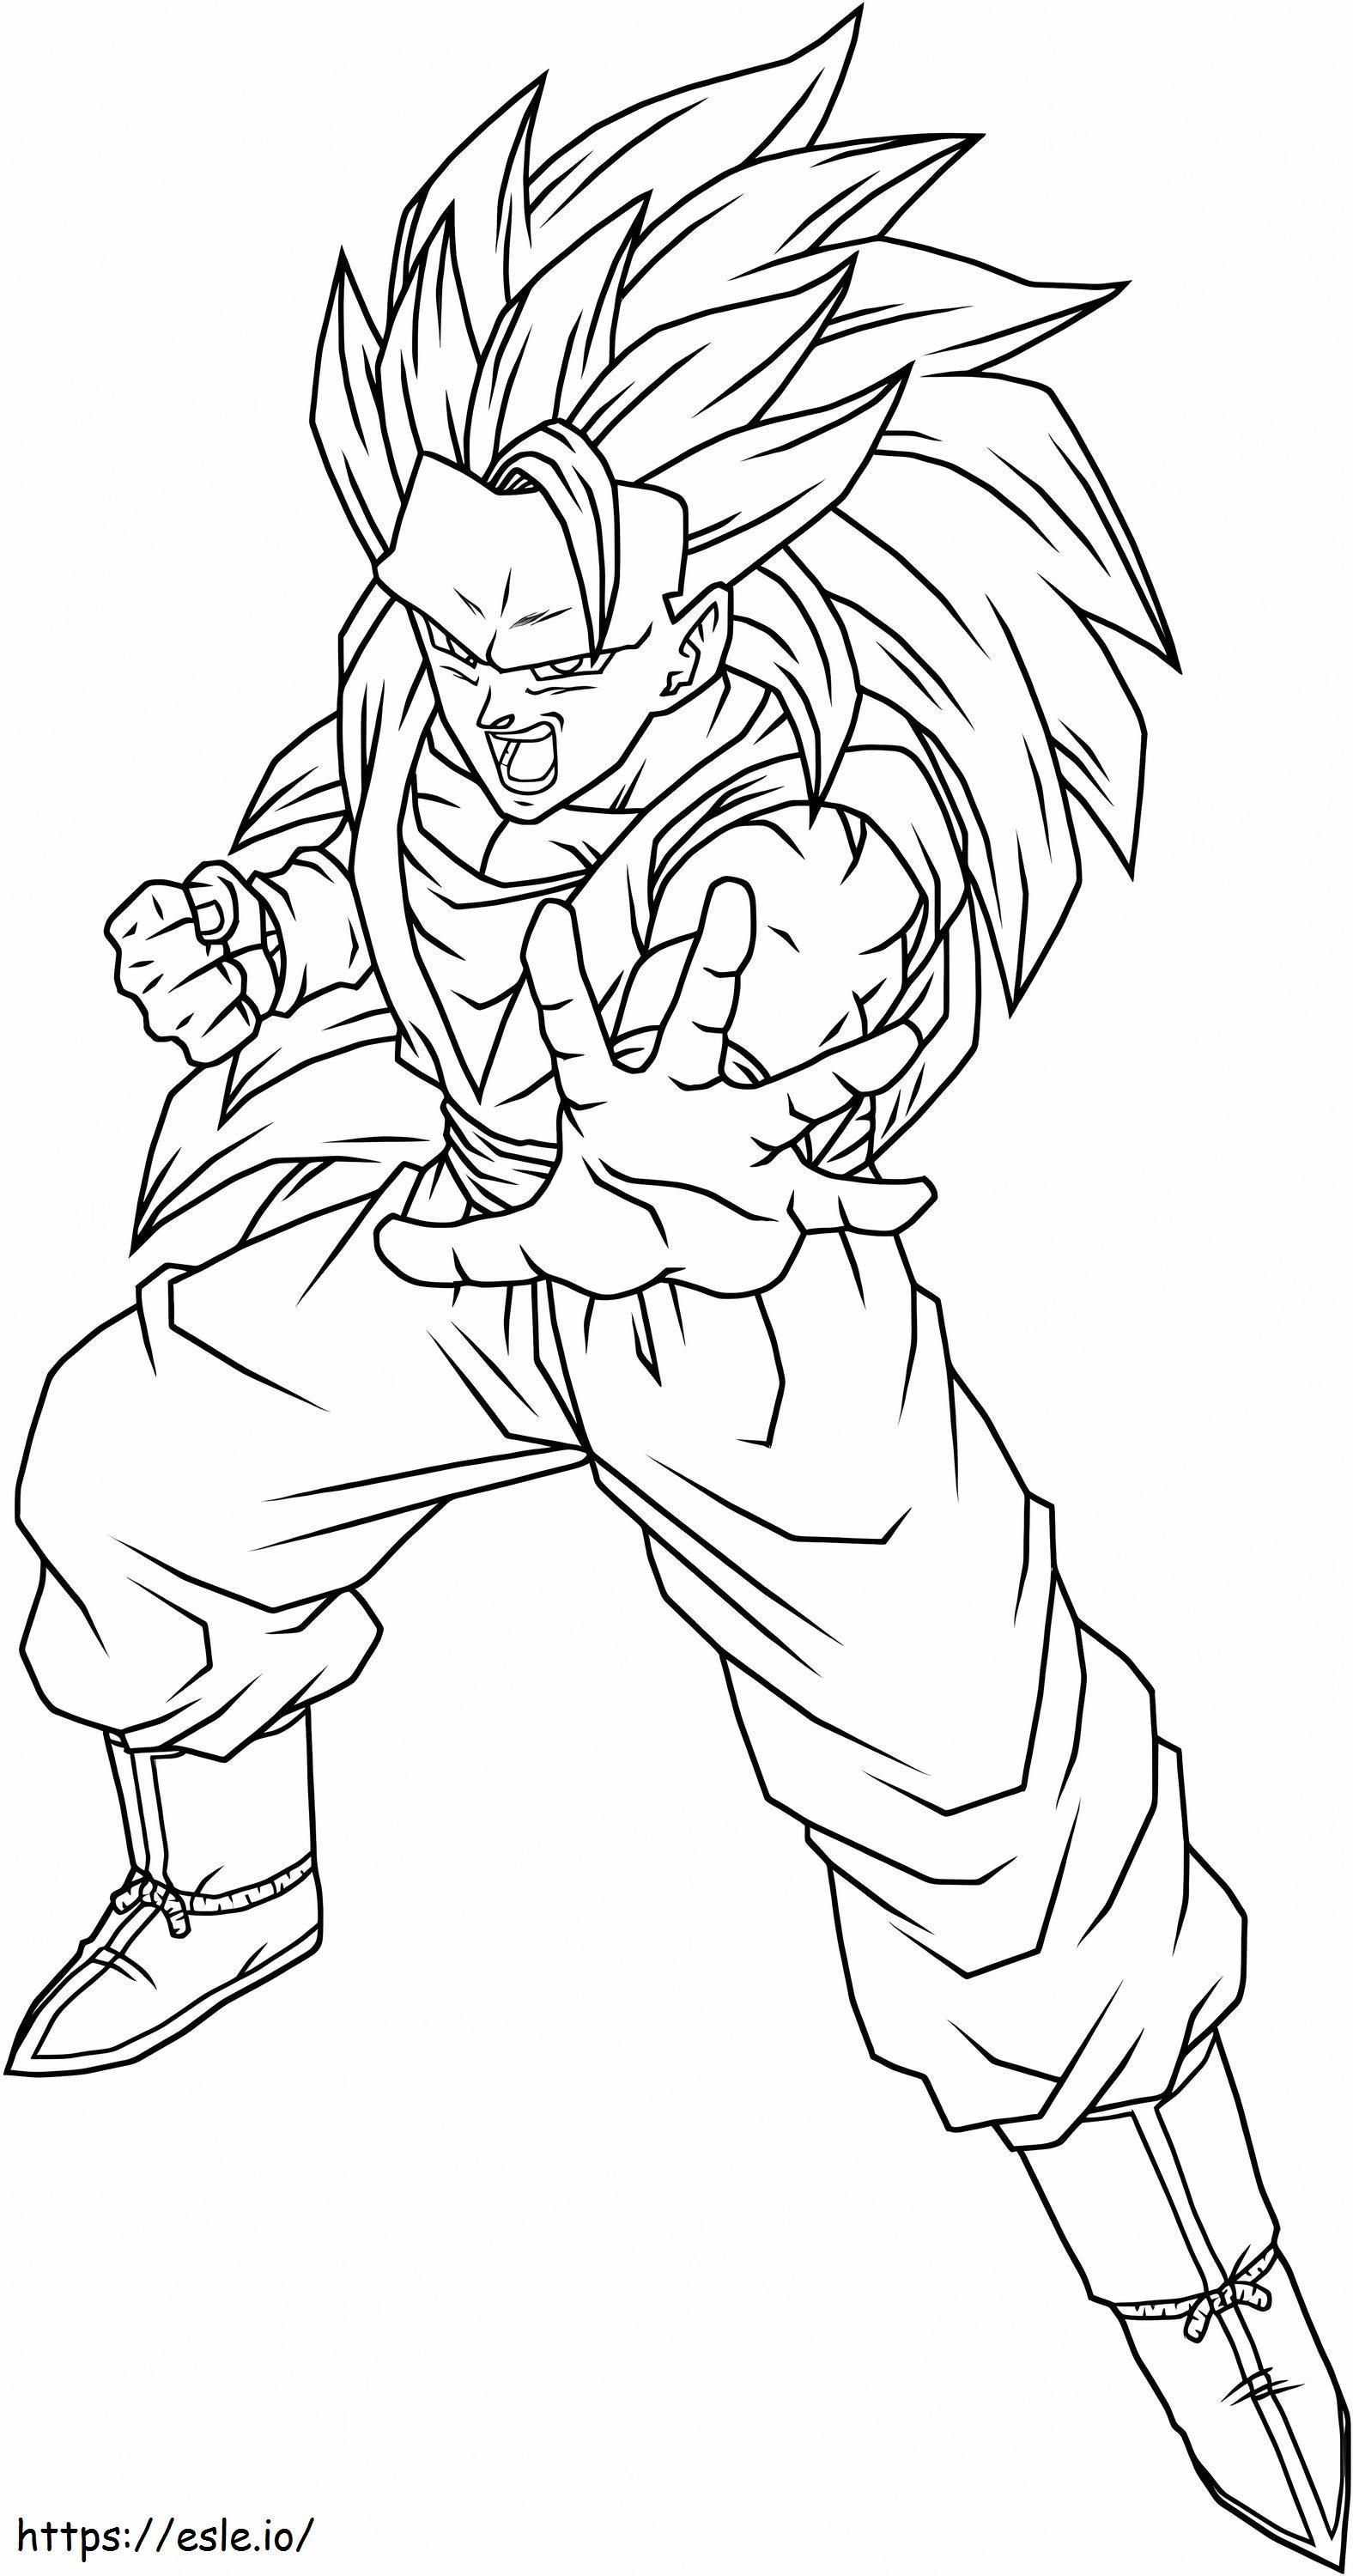 Impresionante Goku SSj3 para colorear